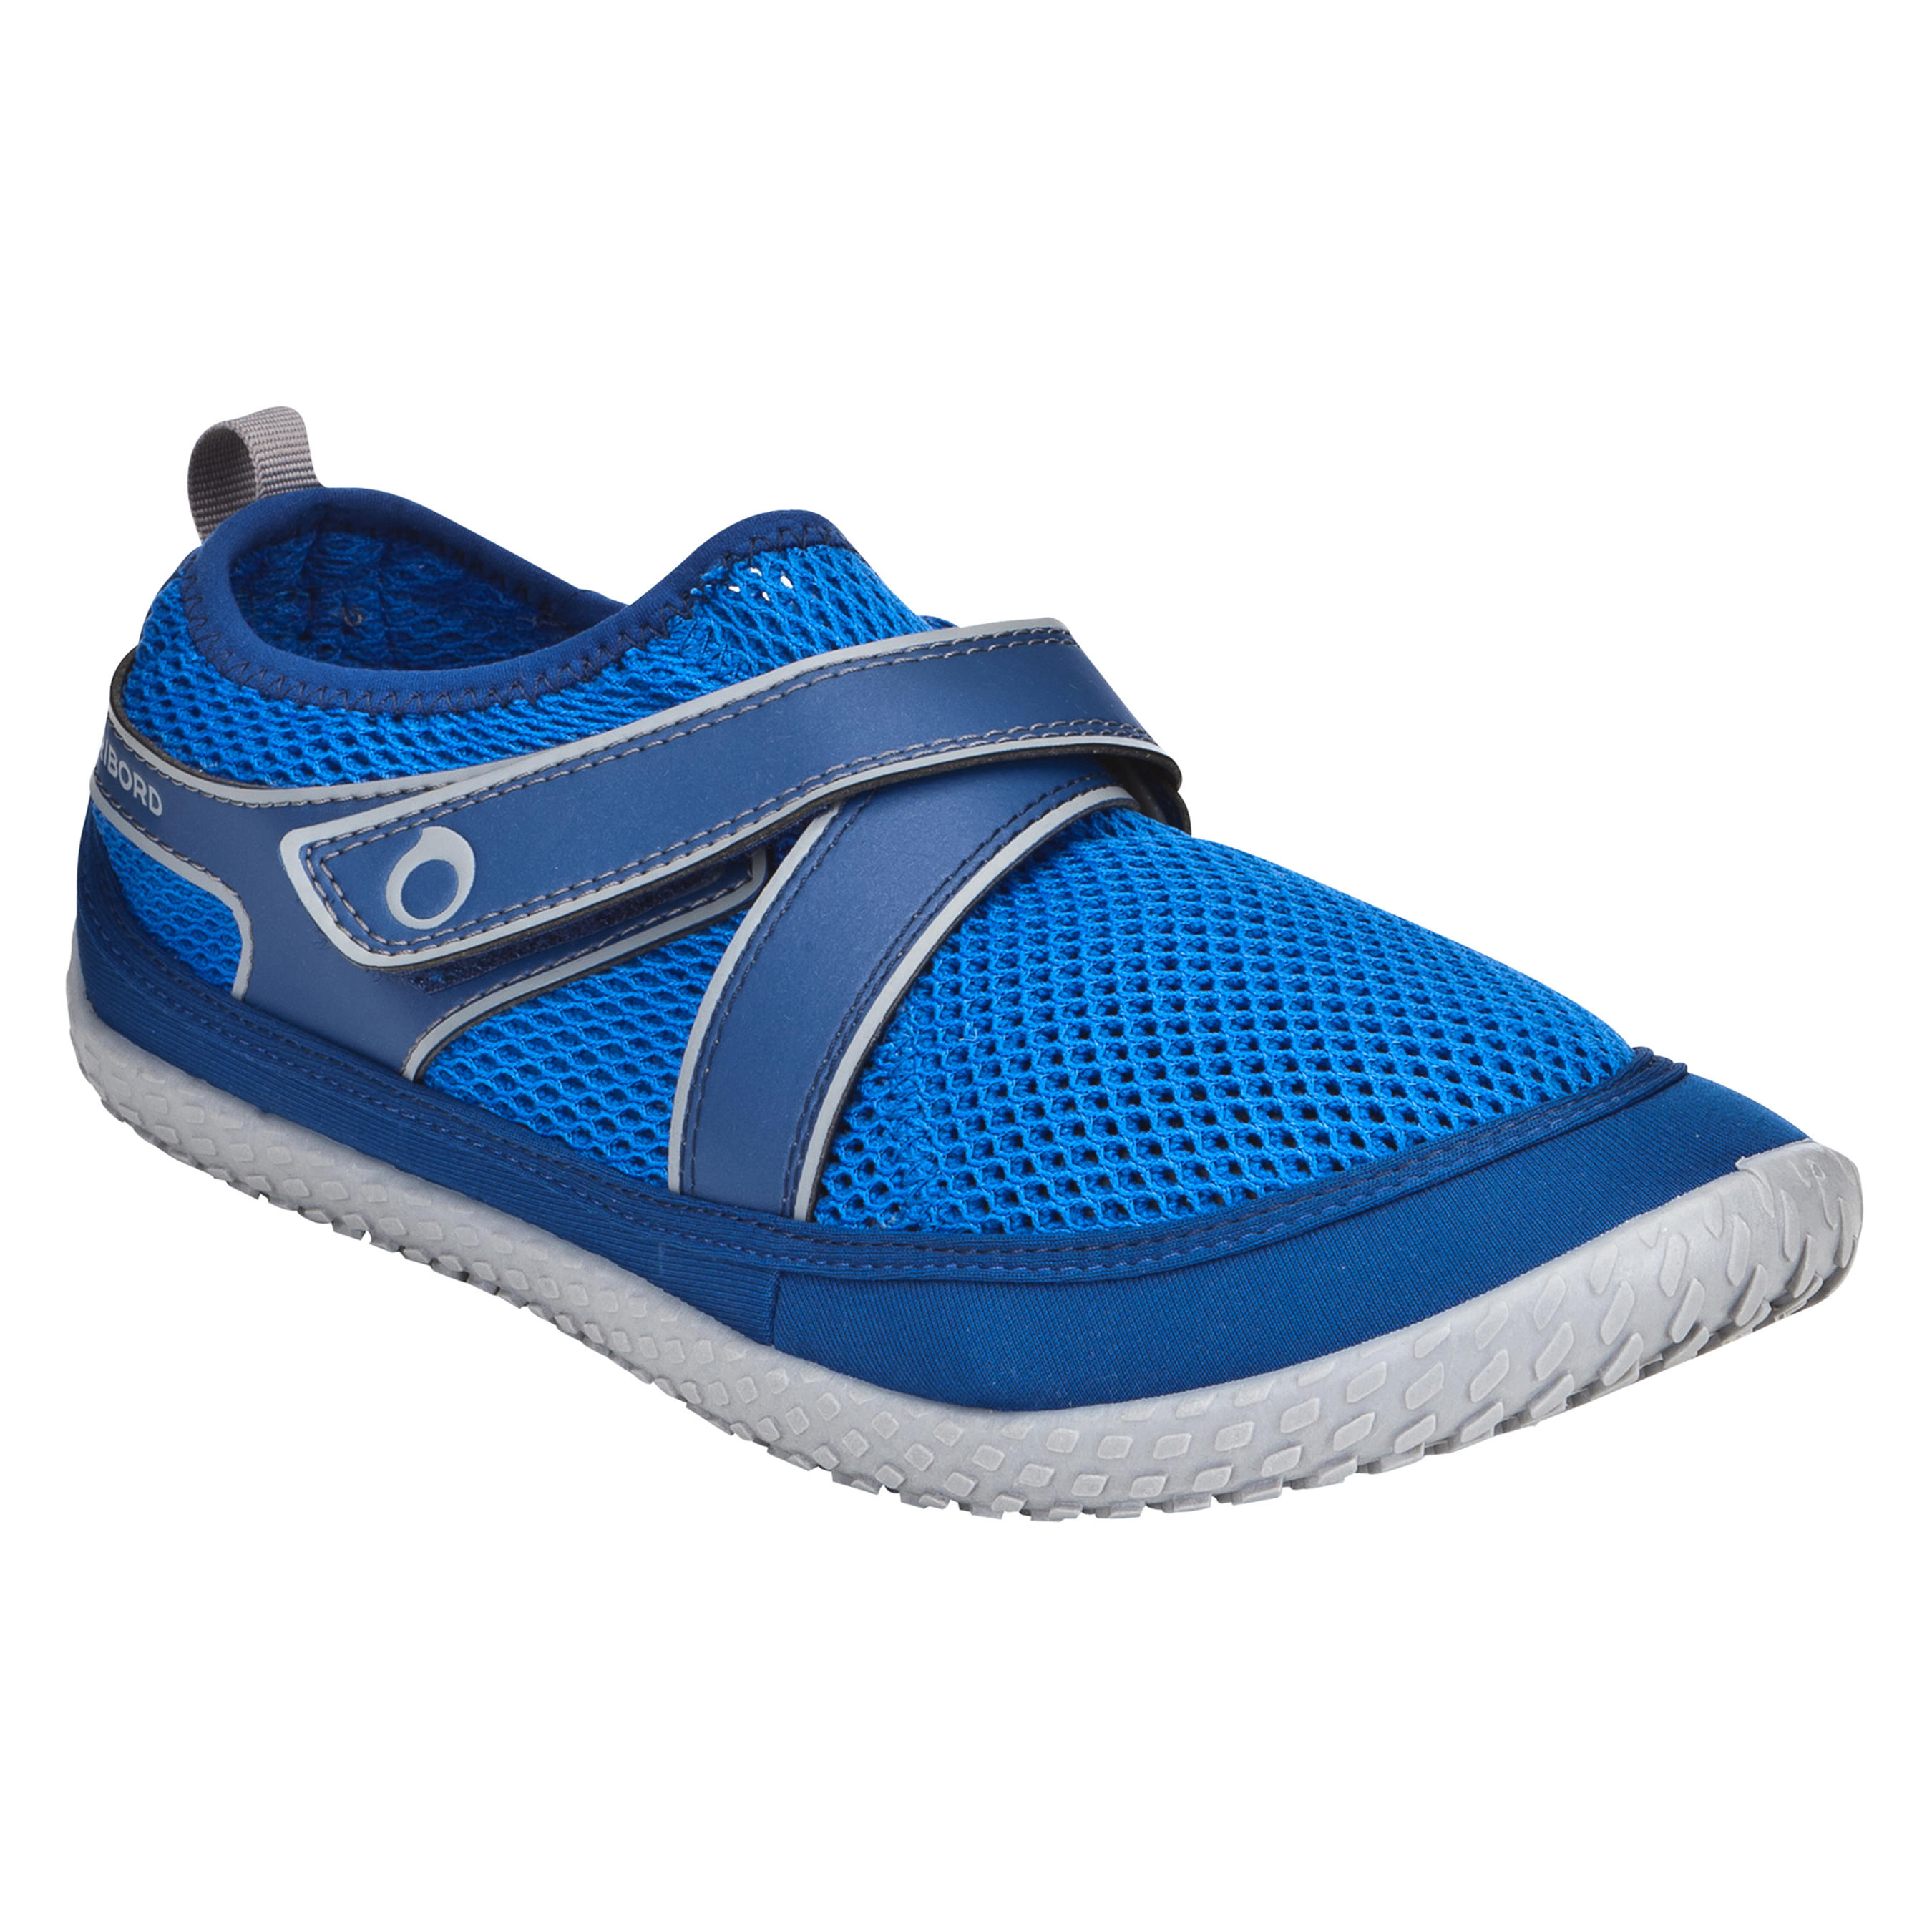 SUBEA 500 Men's Aquashoes - Blue